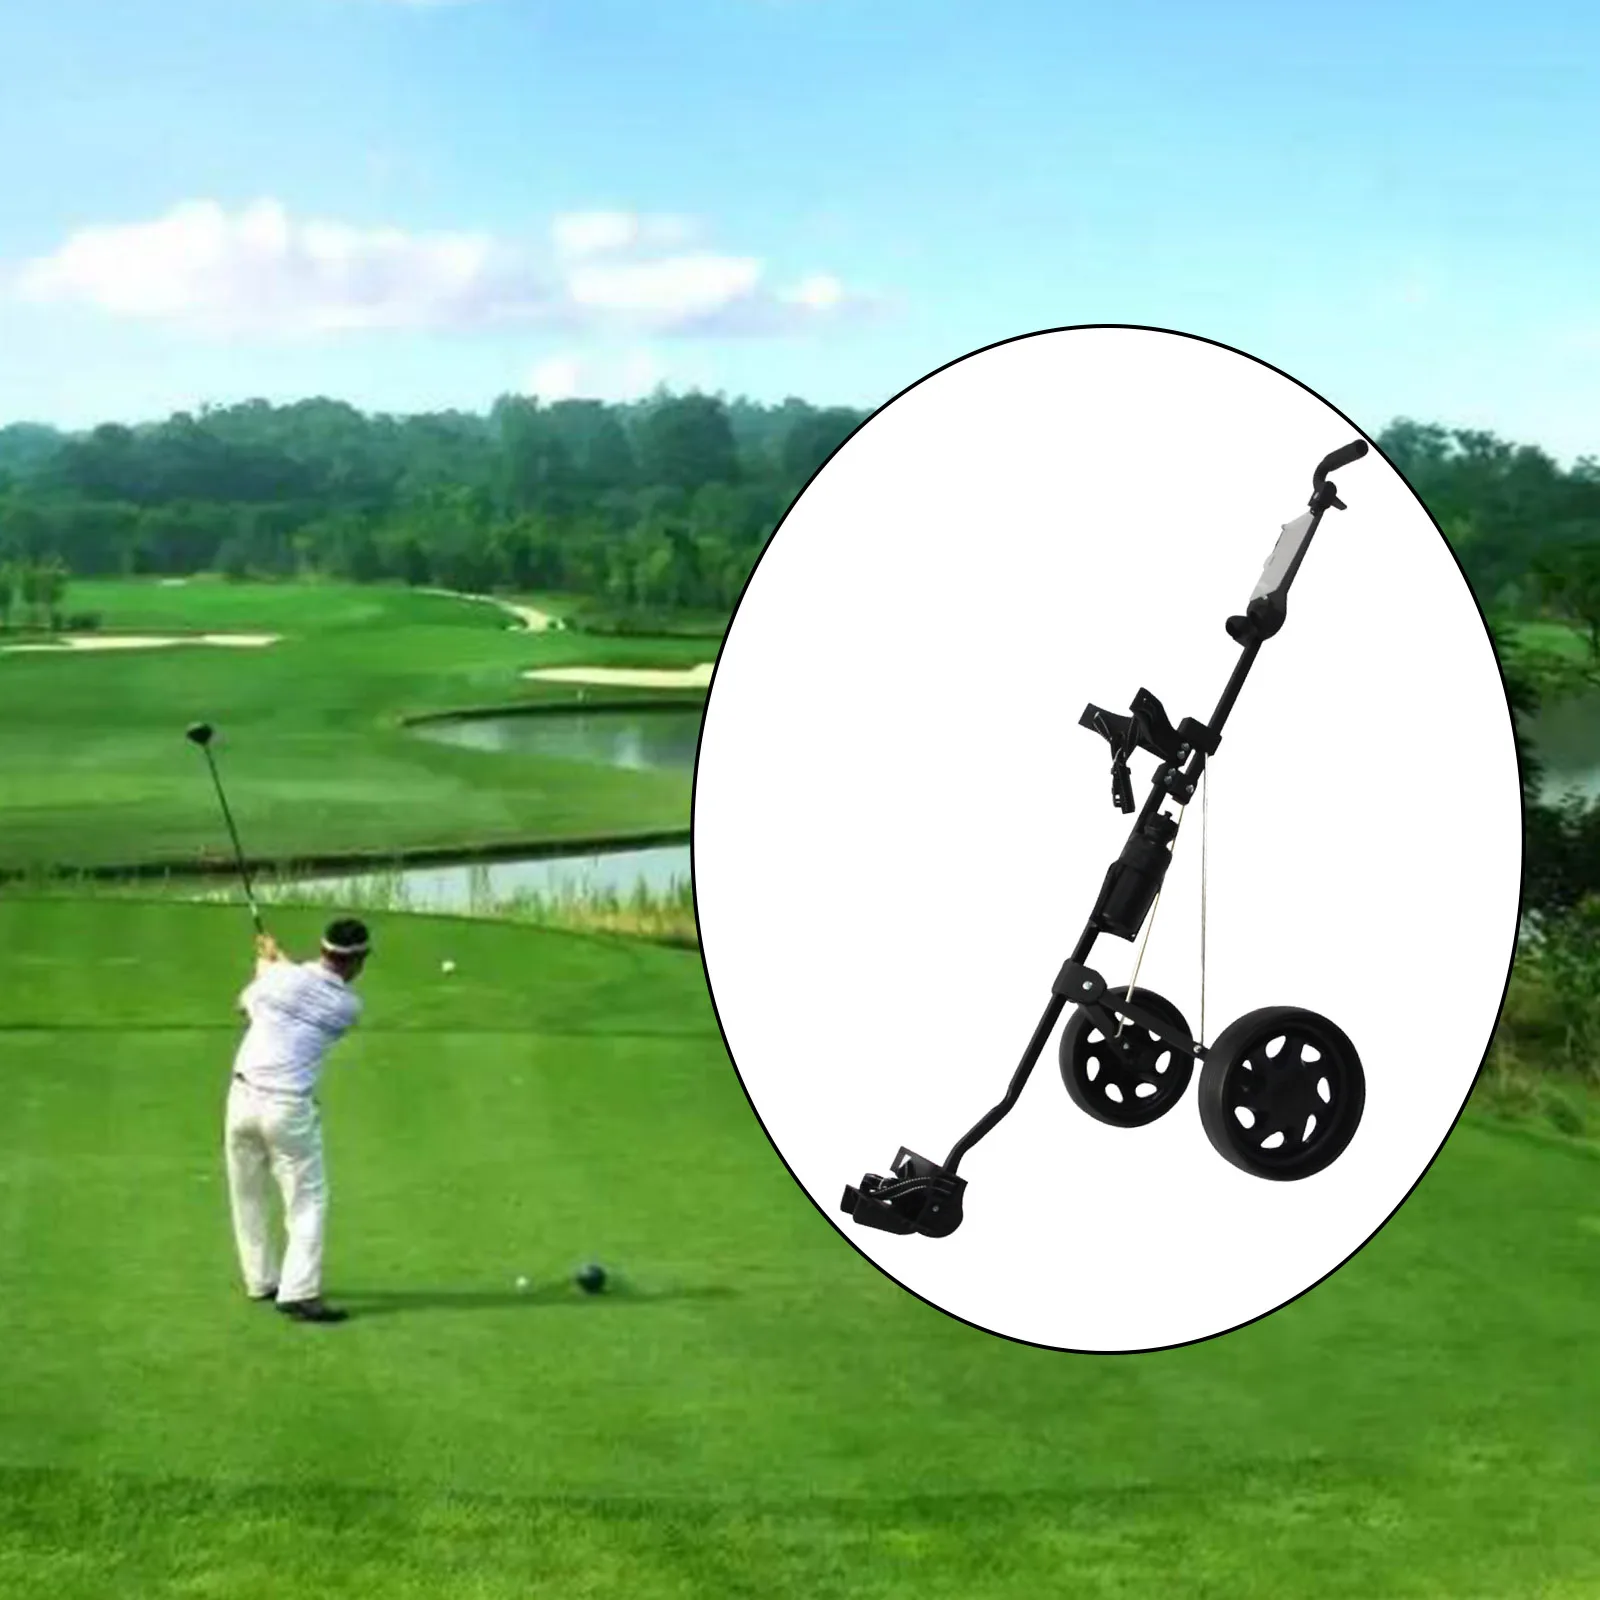 Golf Trolley 2 Wheel Foldable Pull Push Cart Black Pushcart Accessories